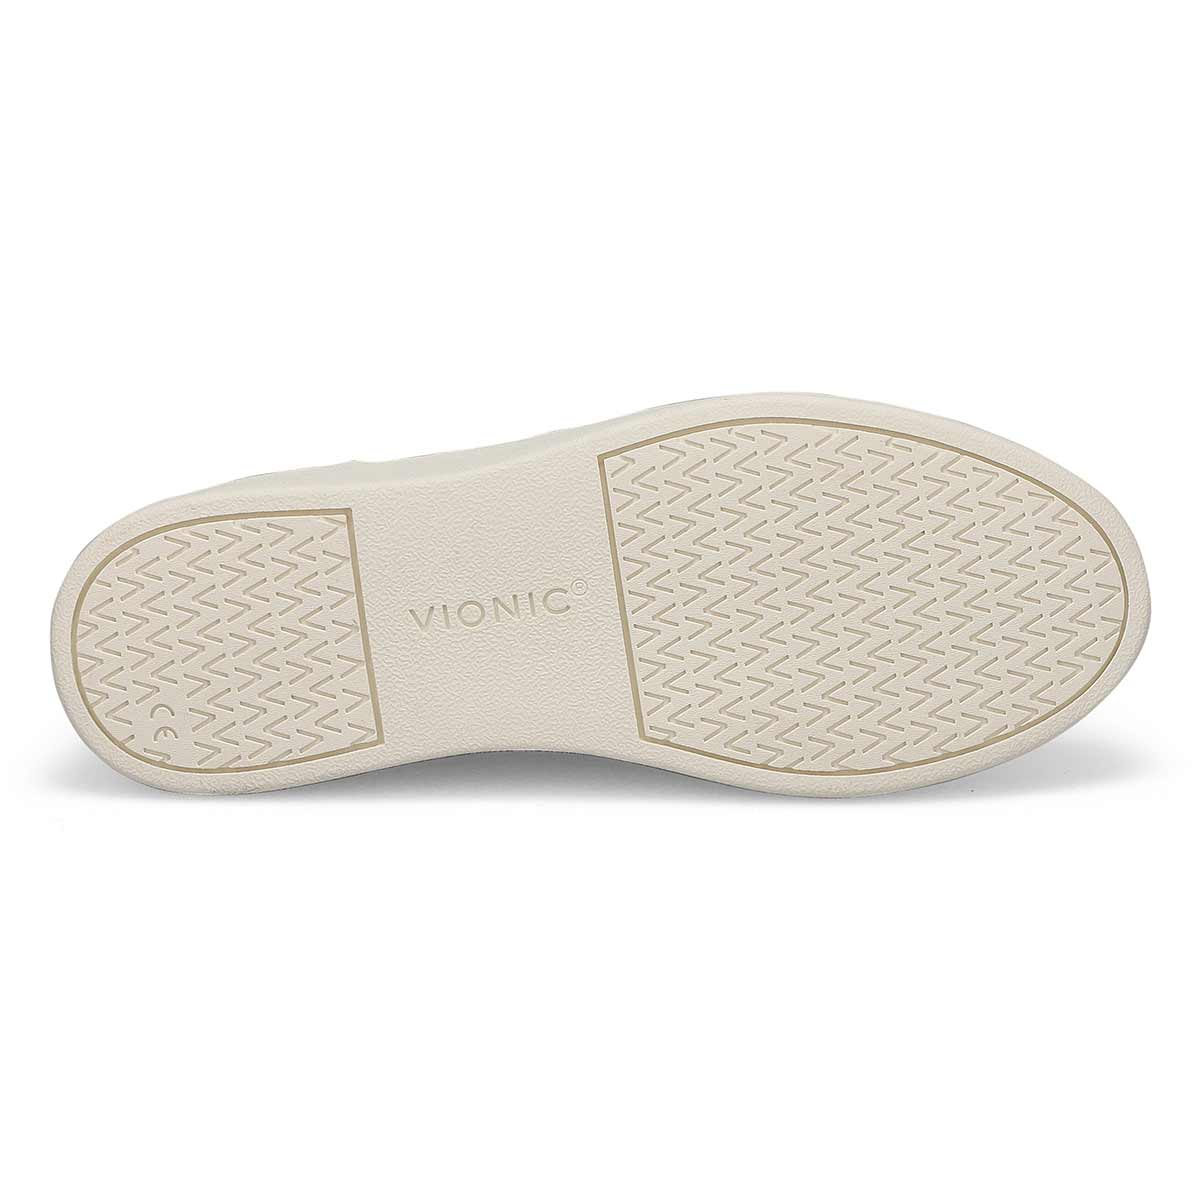 Vionic Ladies Winny Casual Sneaker - White | SoftMoc.com